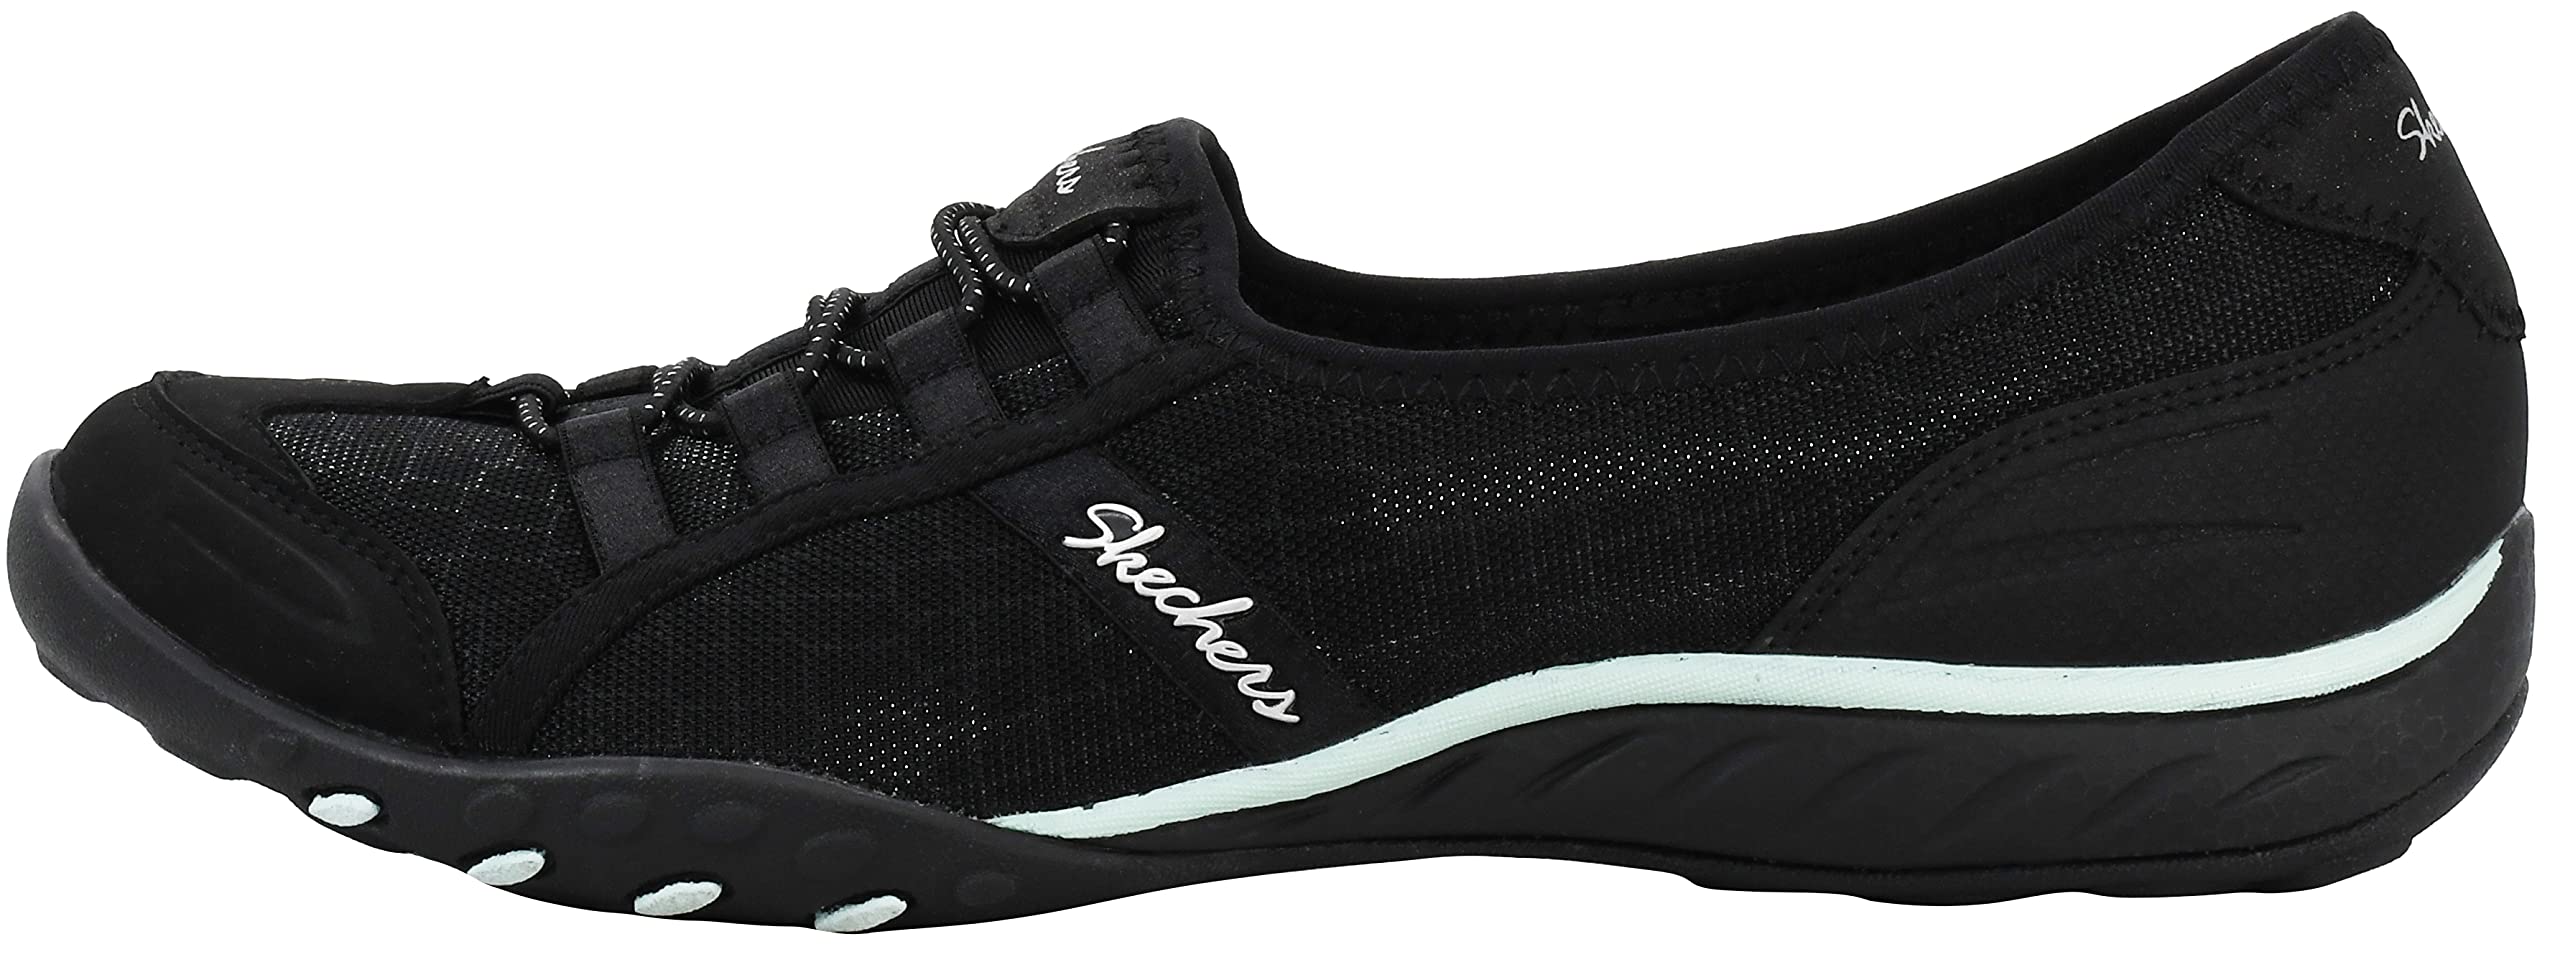 Skechers Women's Spectacular Breathe Easy Sneaker Black/Aqua 7.5